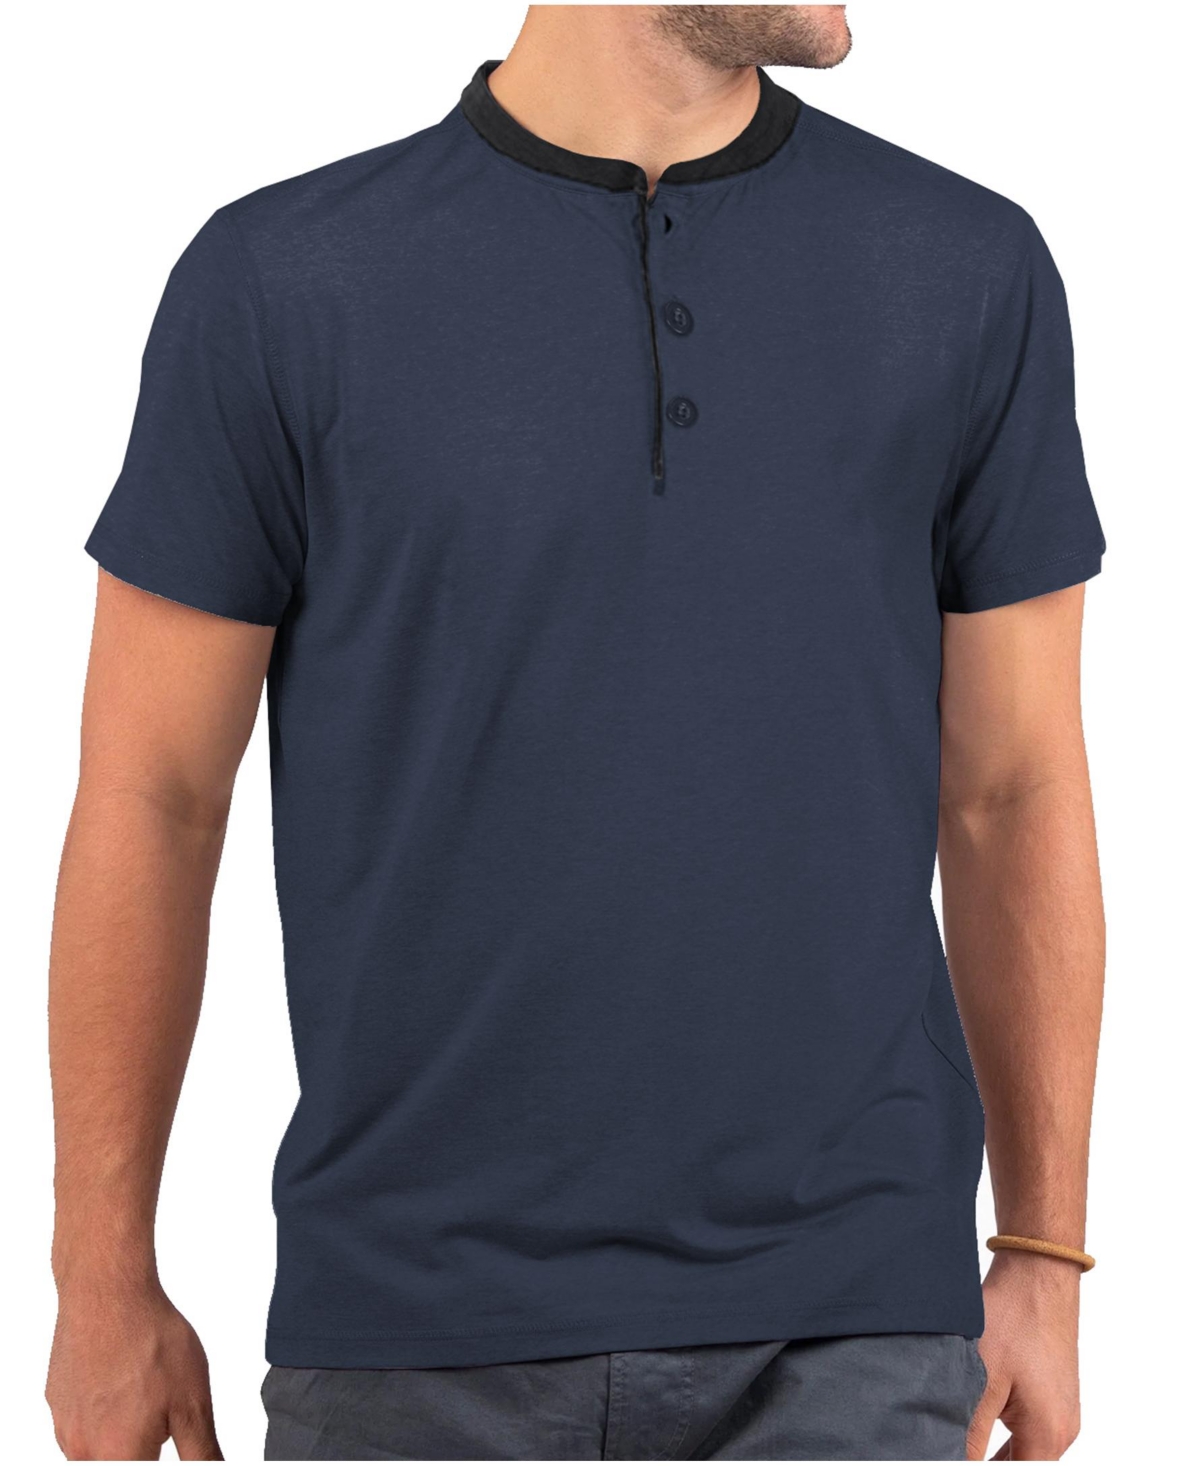 Men's Short Sleeve Henley T-Shirt - Dark gray